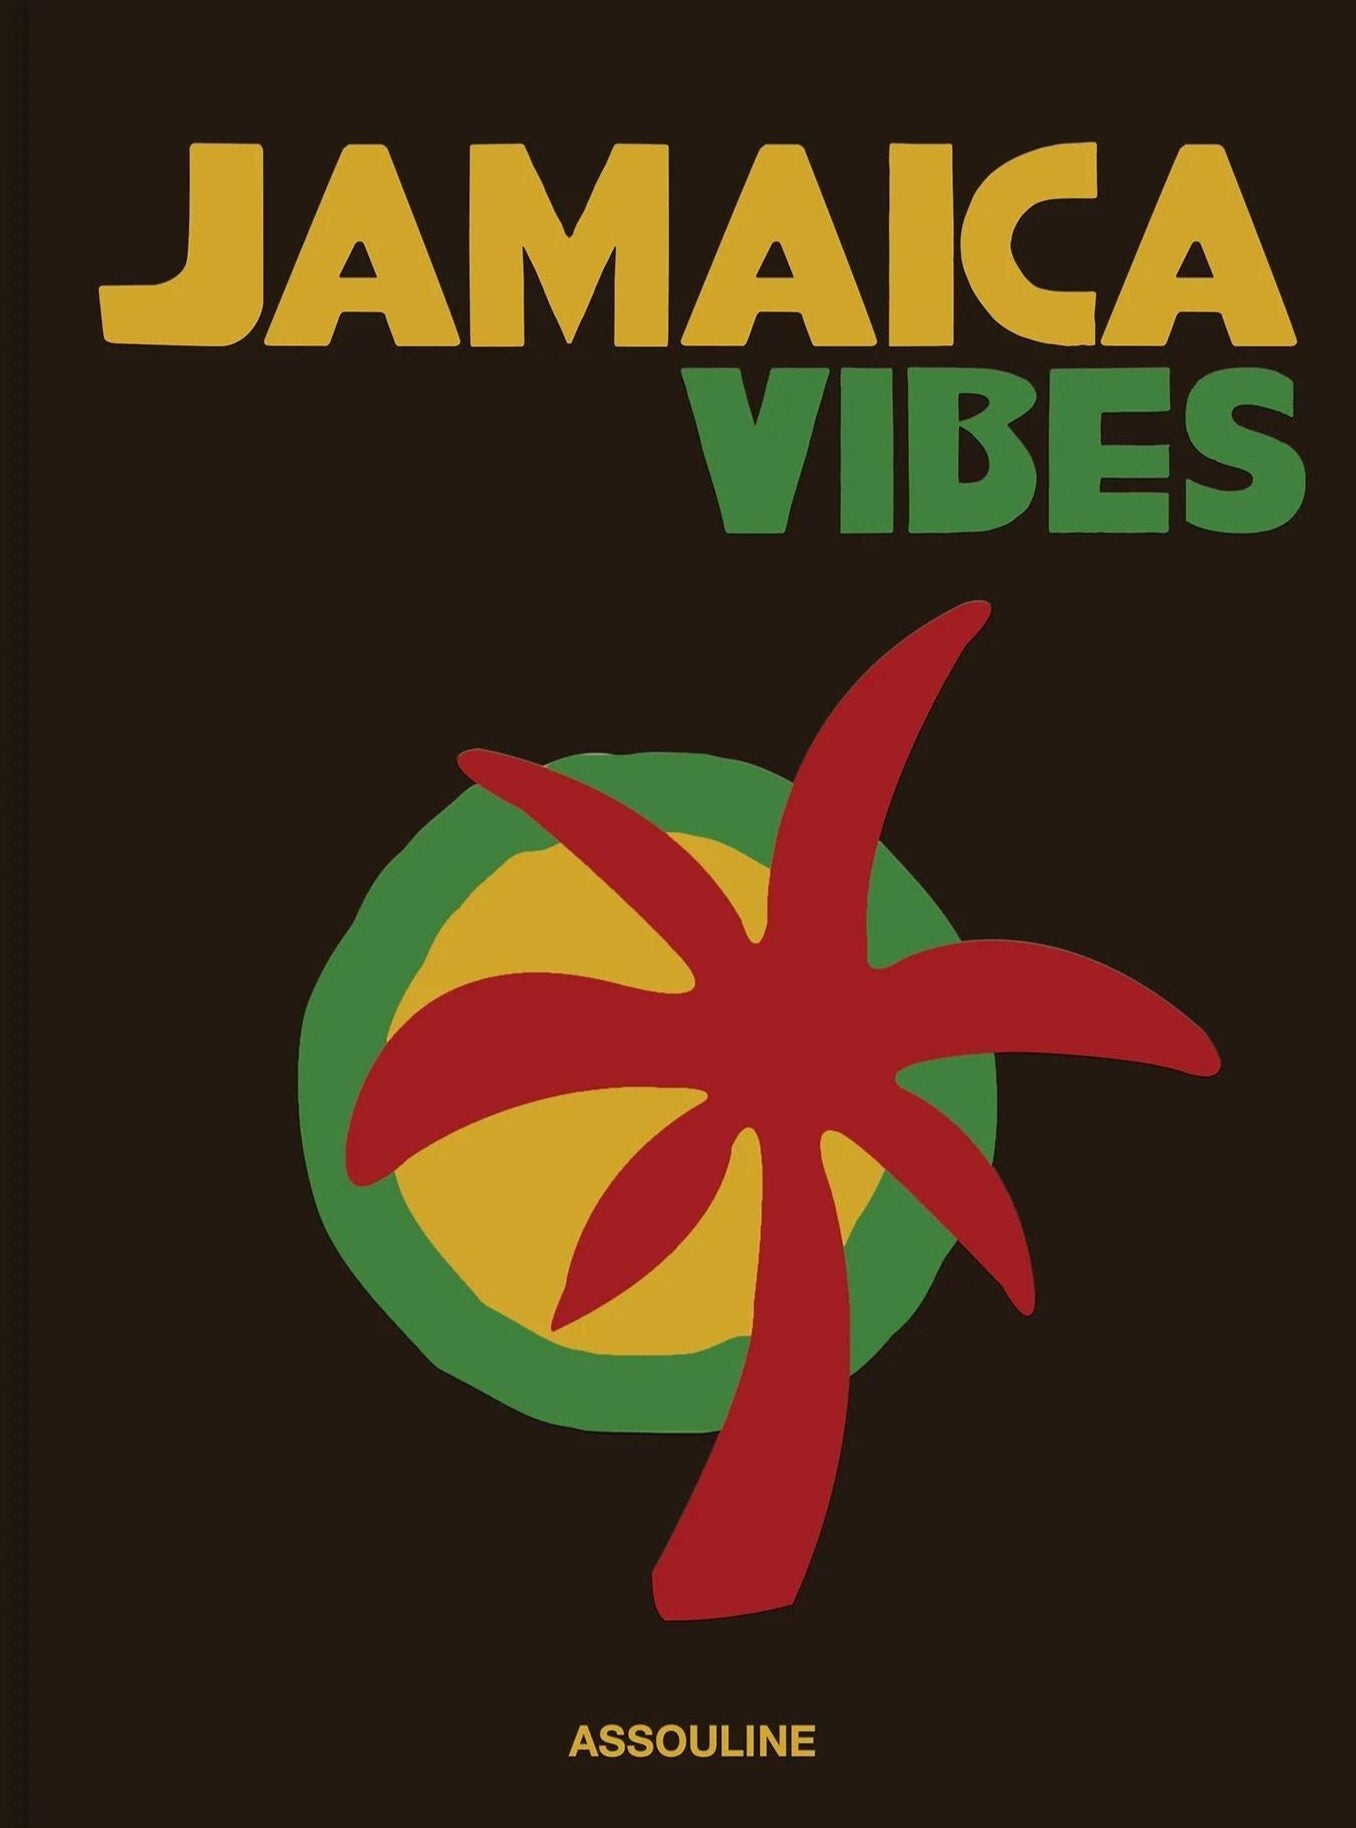 Assouline Jamaica vibrations